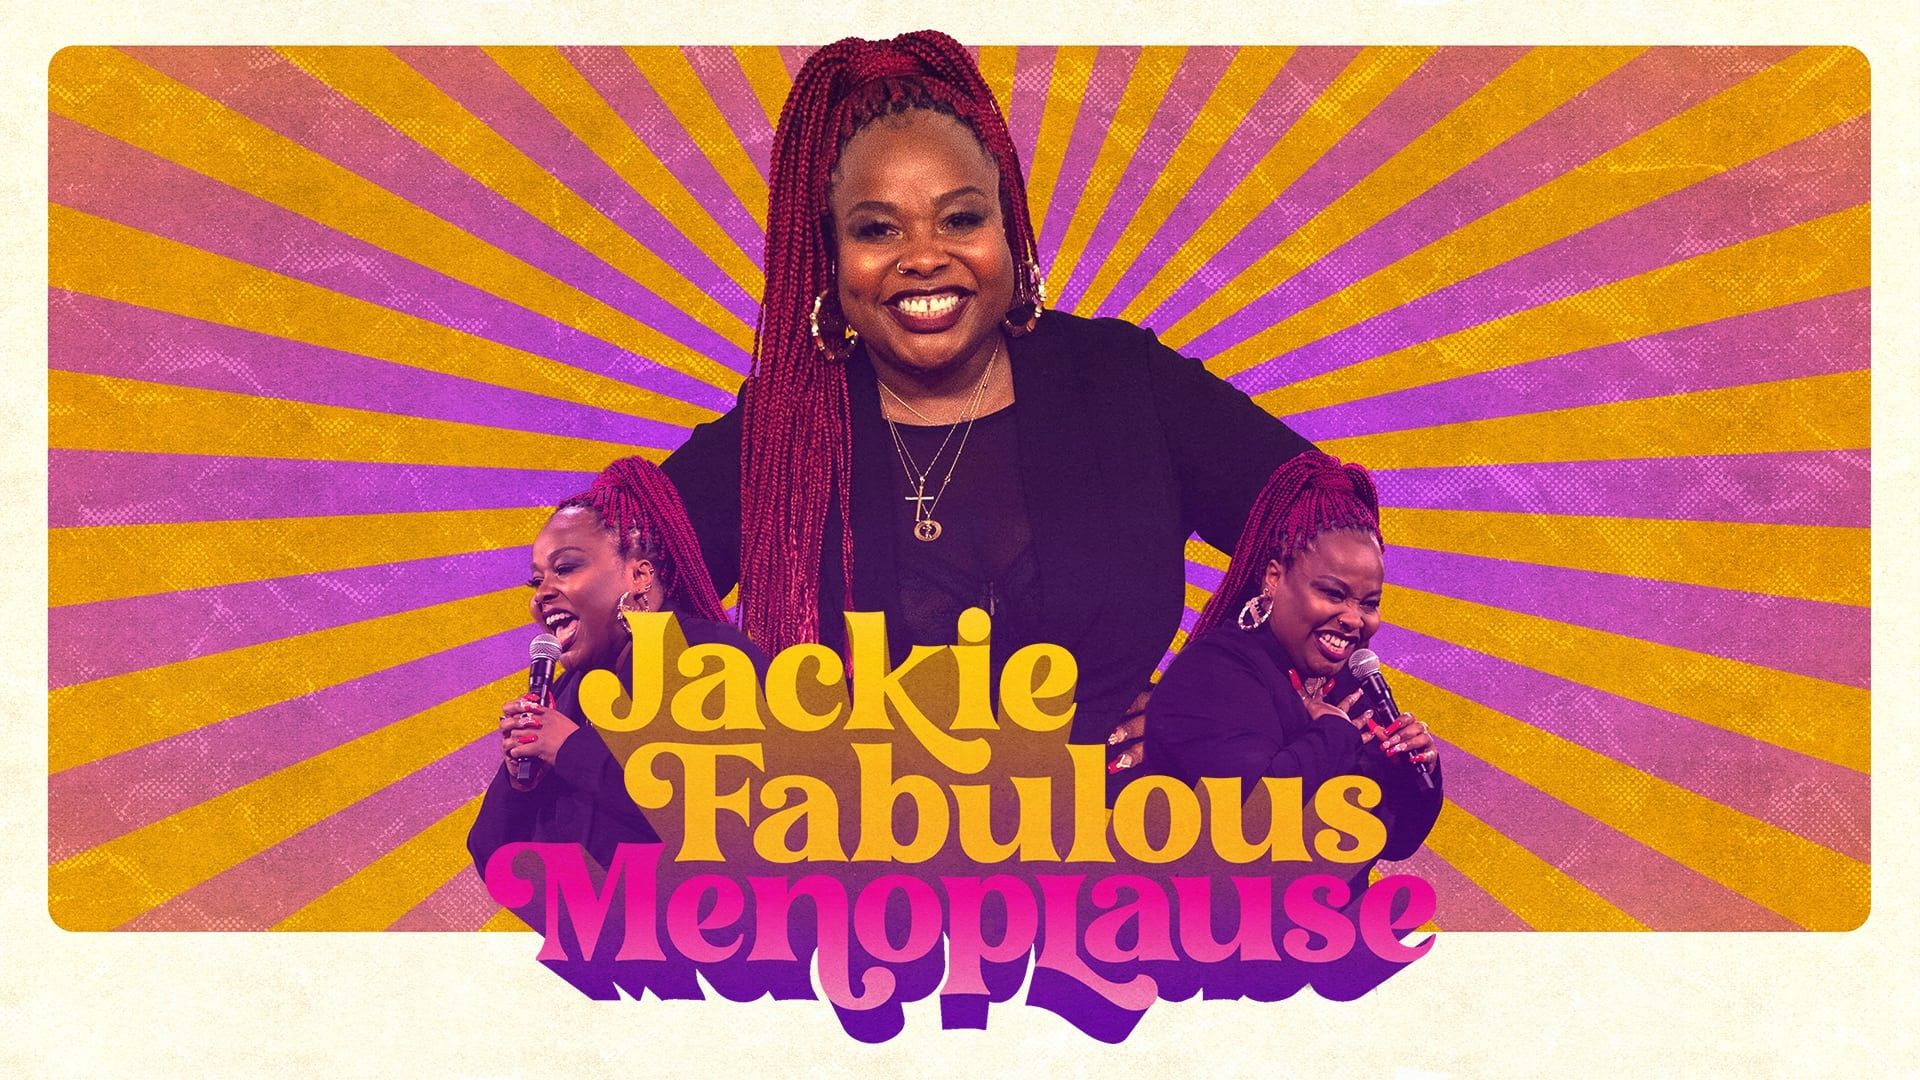 Jackie Fabulous: Menoplause background